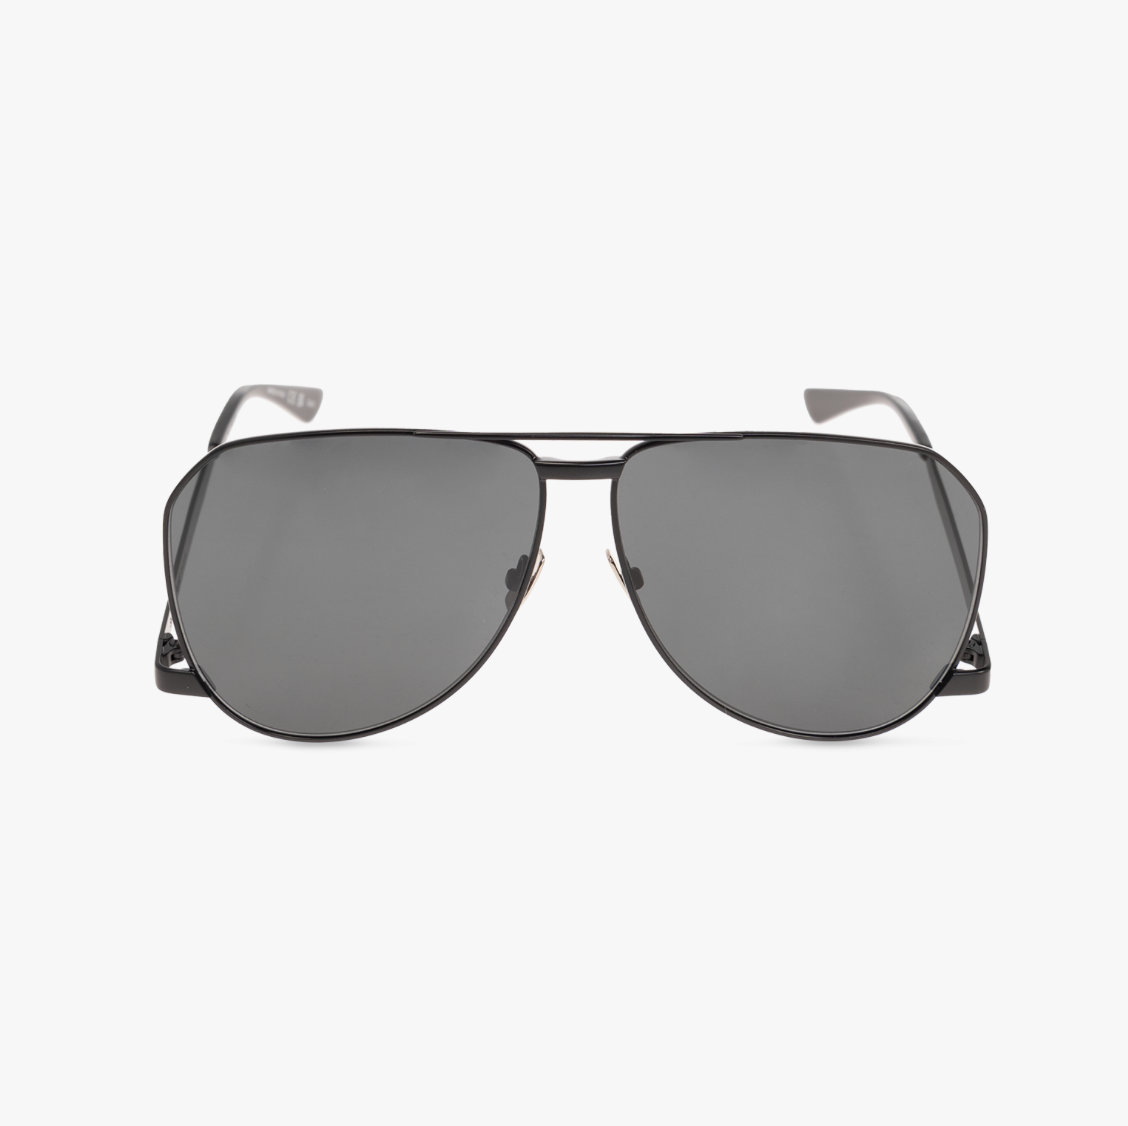 Yves Saint Laurent SL-690-DUST-001 61mm New Sunglasses